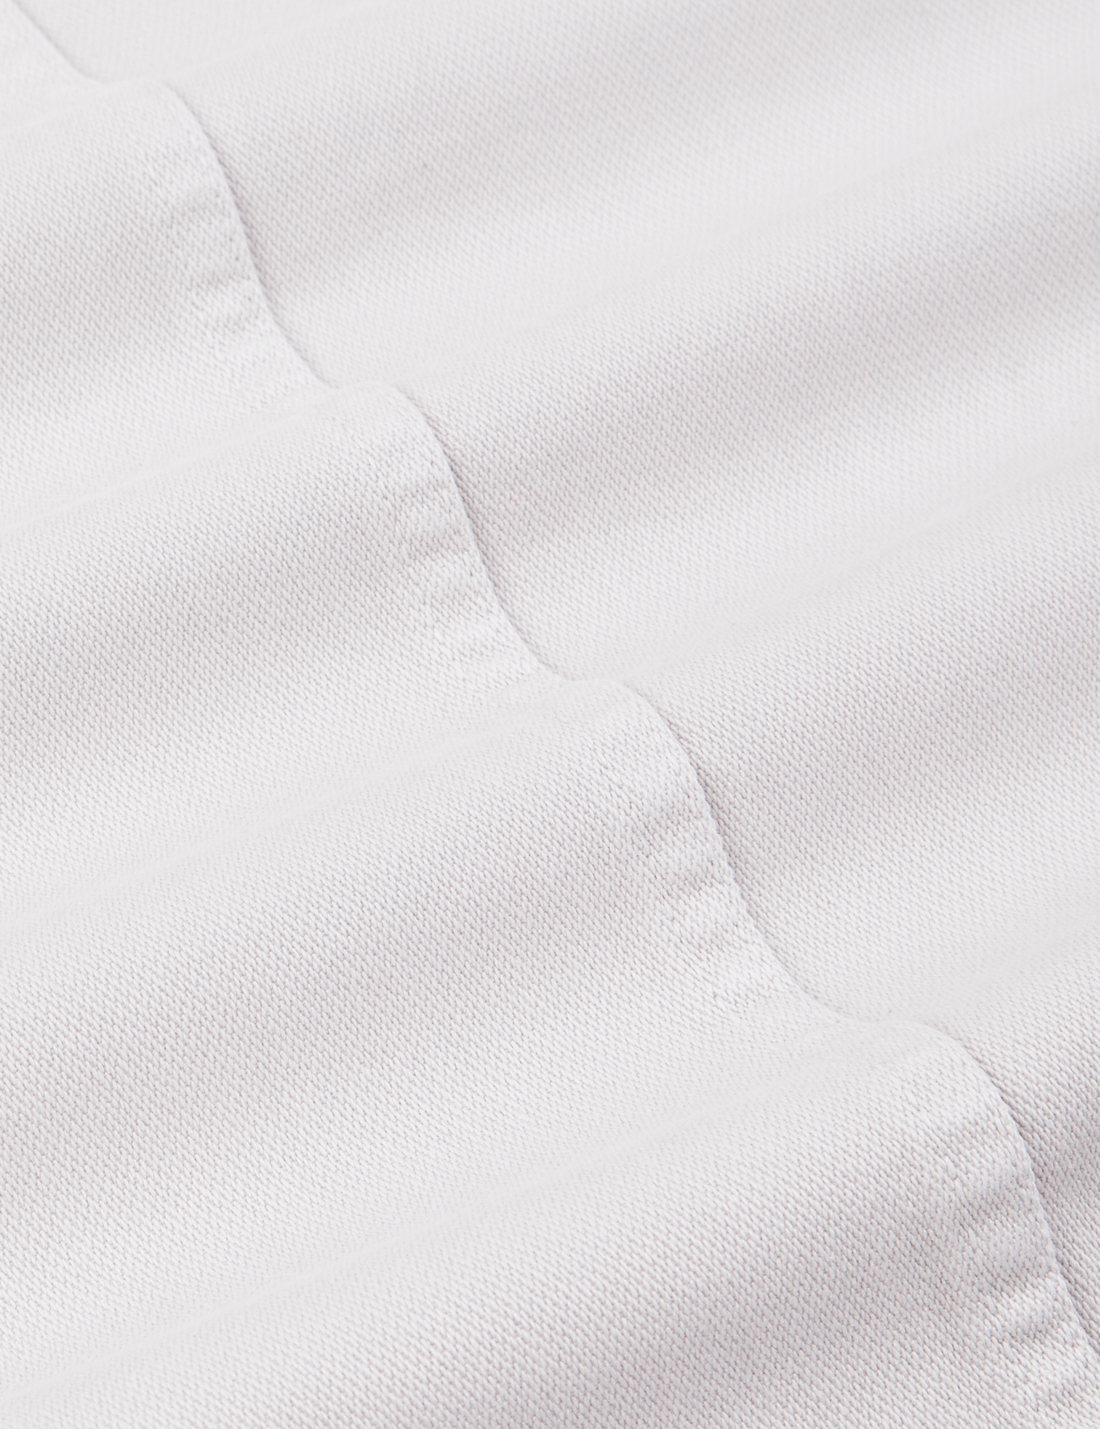 Denim Work Jacket in Dishwater White fabric detail close up